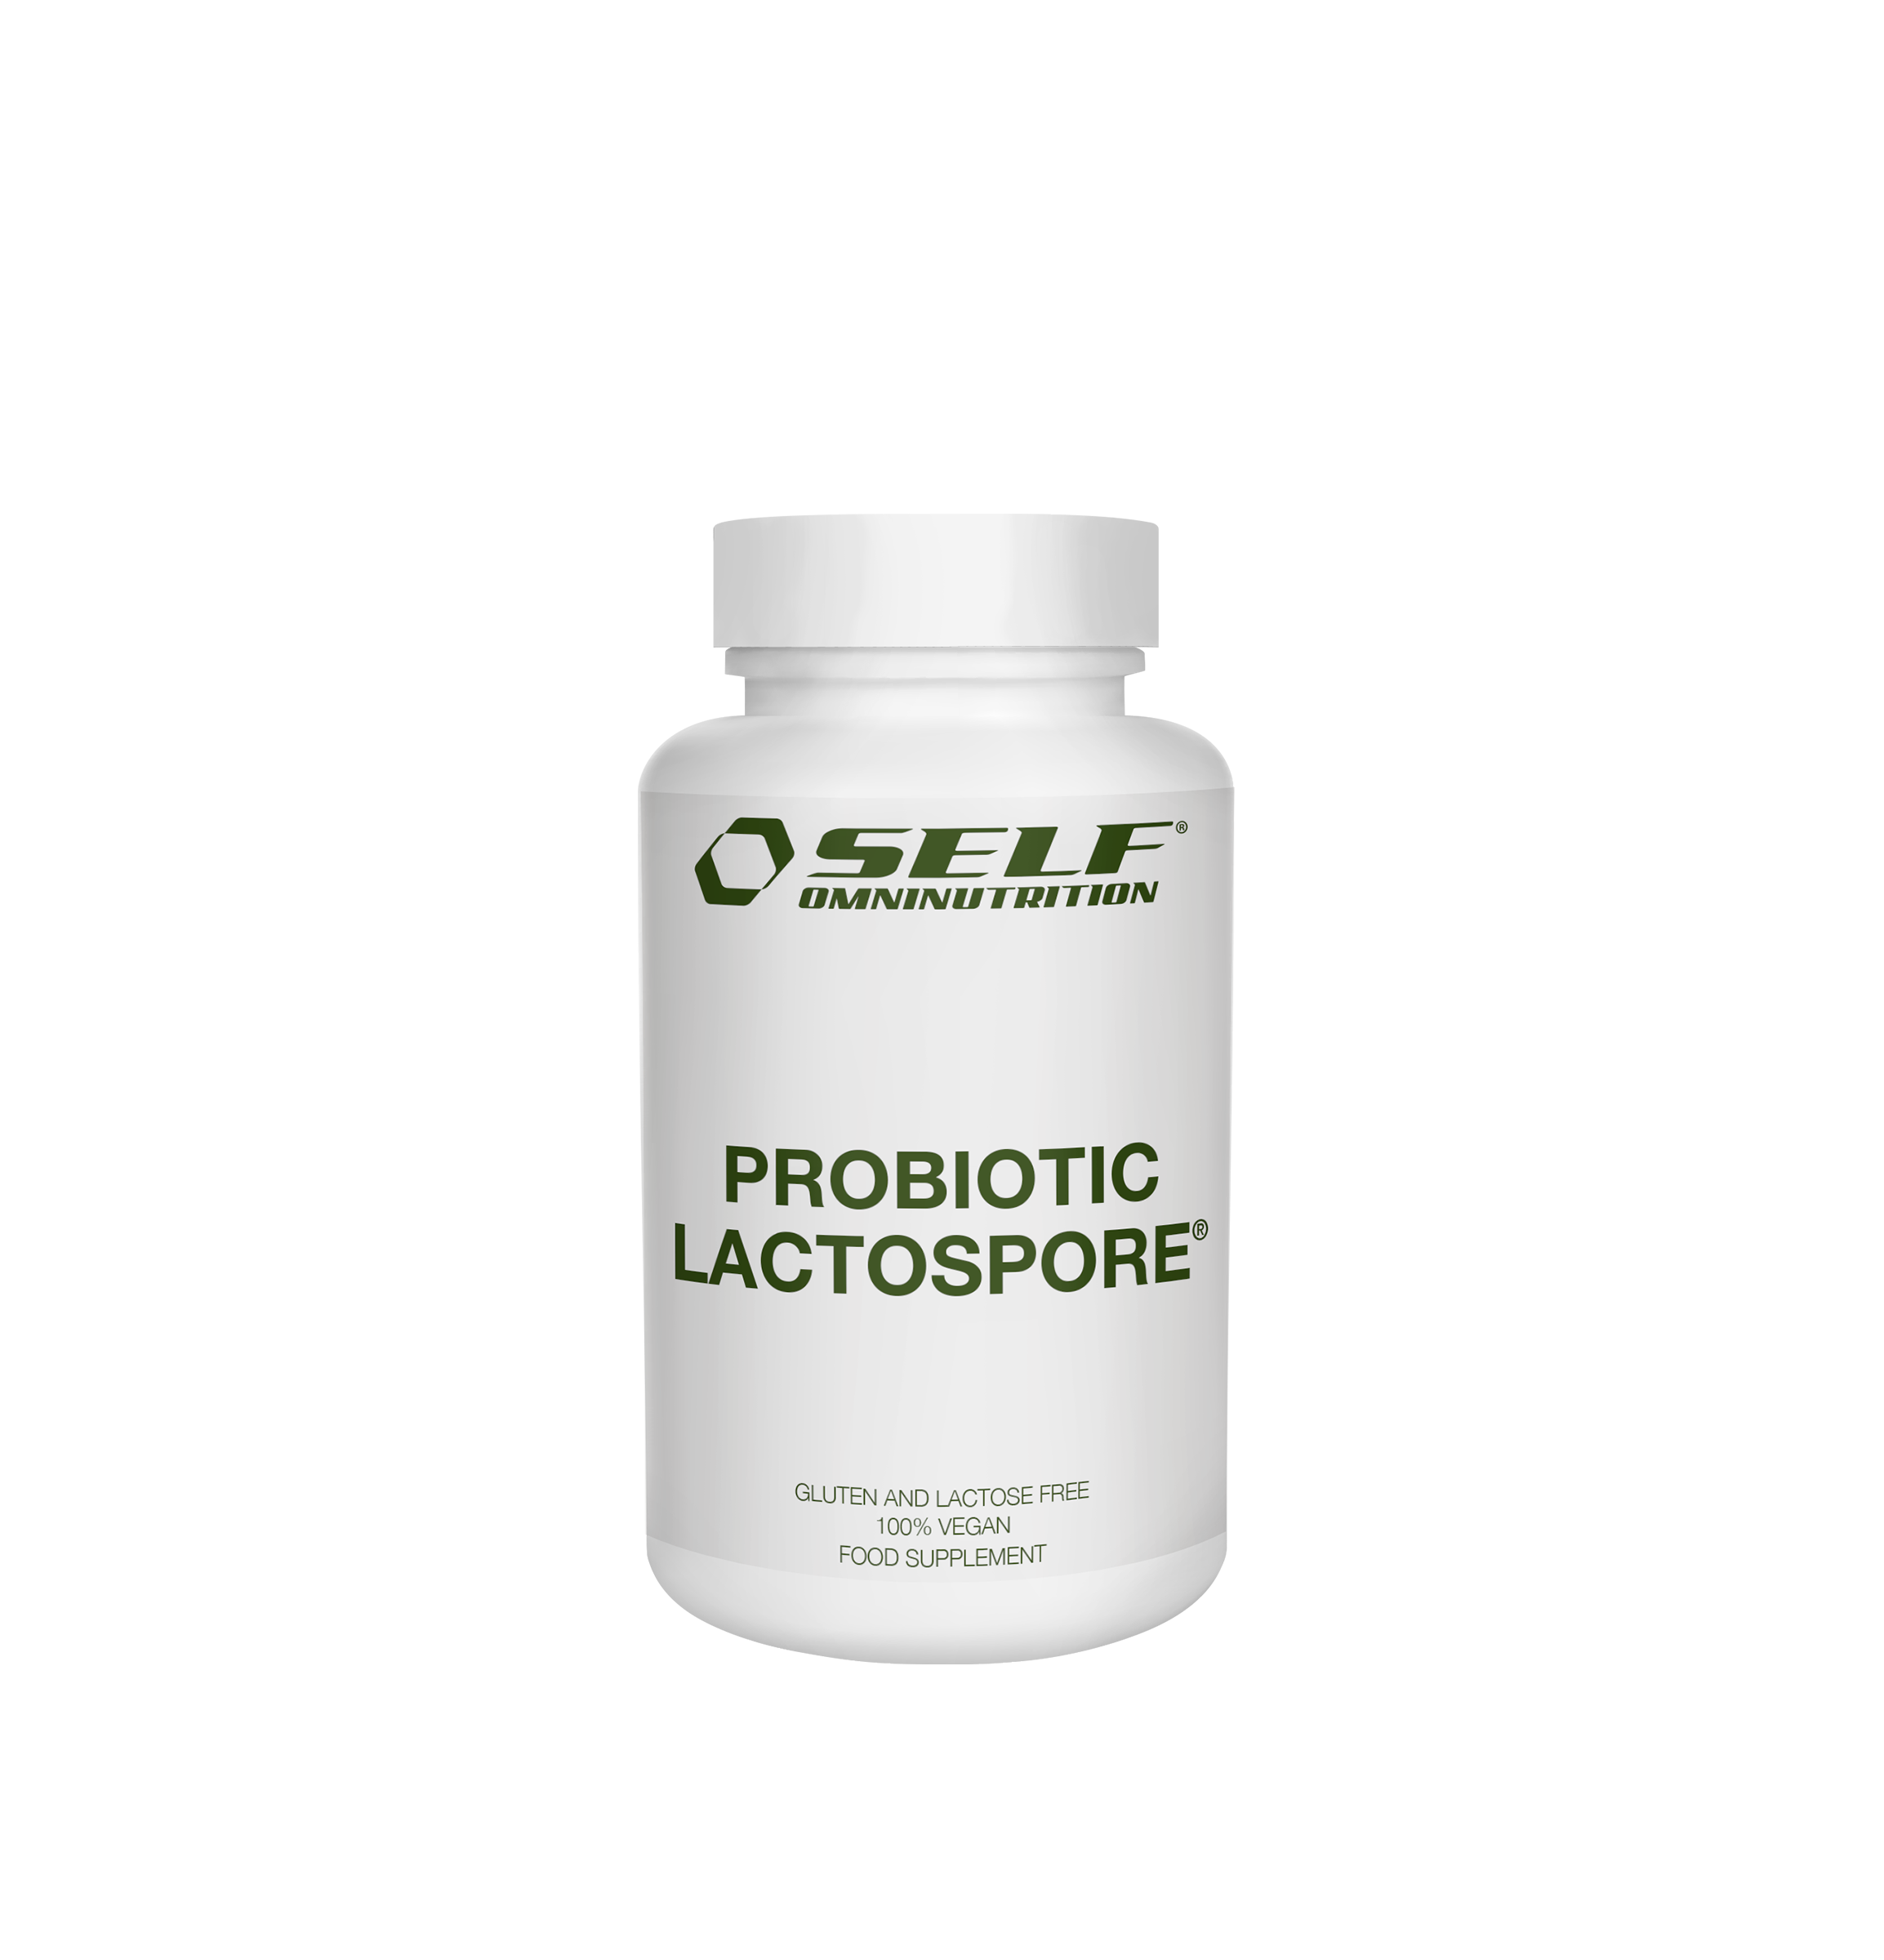 913001 probiotic lactospore fitness, nutrition